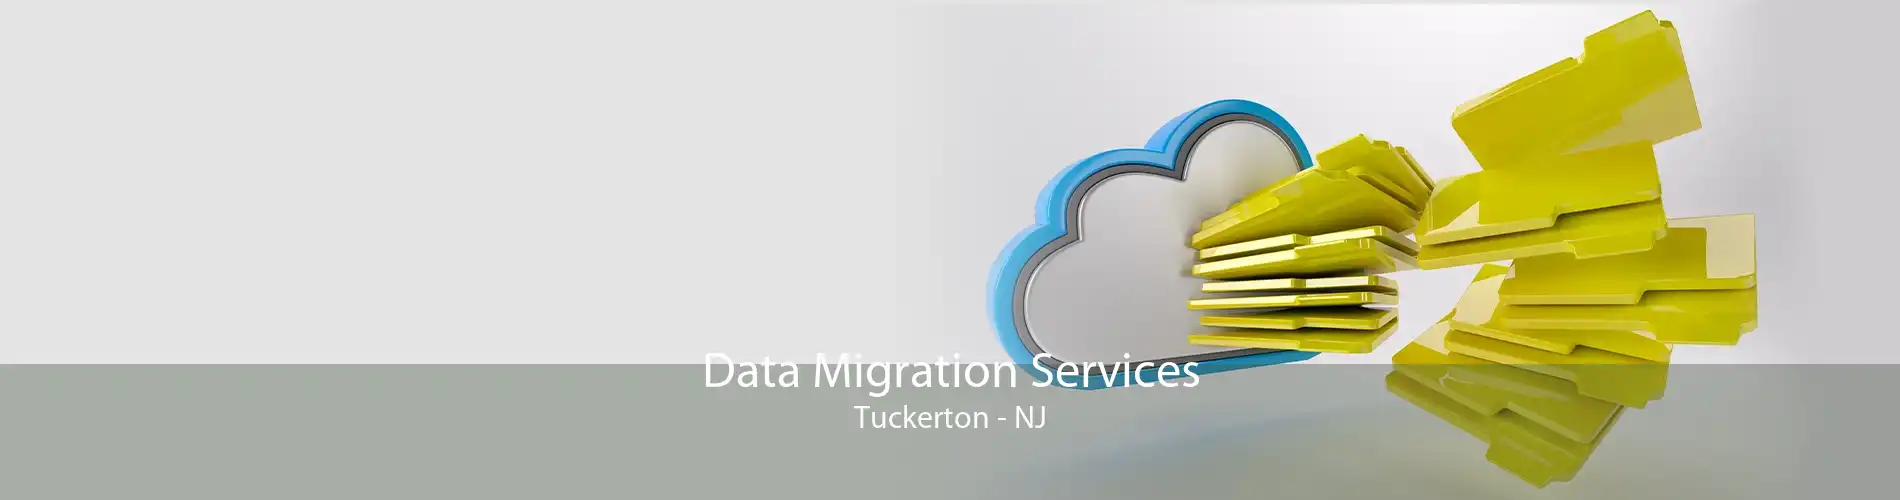 Data Migration Services Tuckerton - NJ